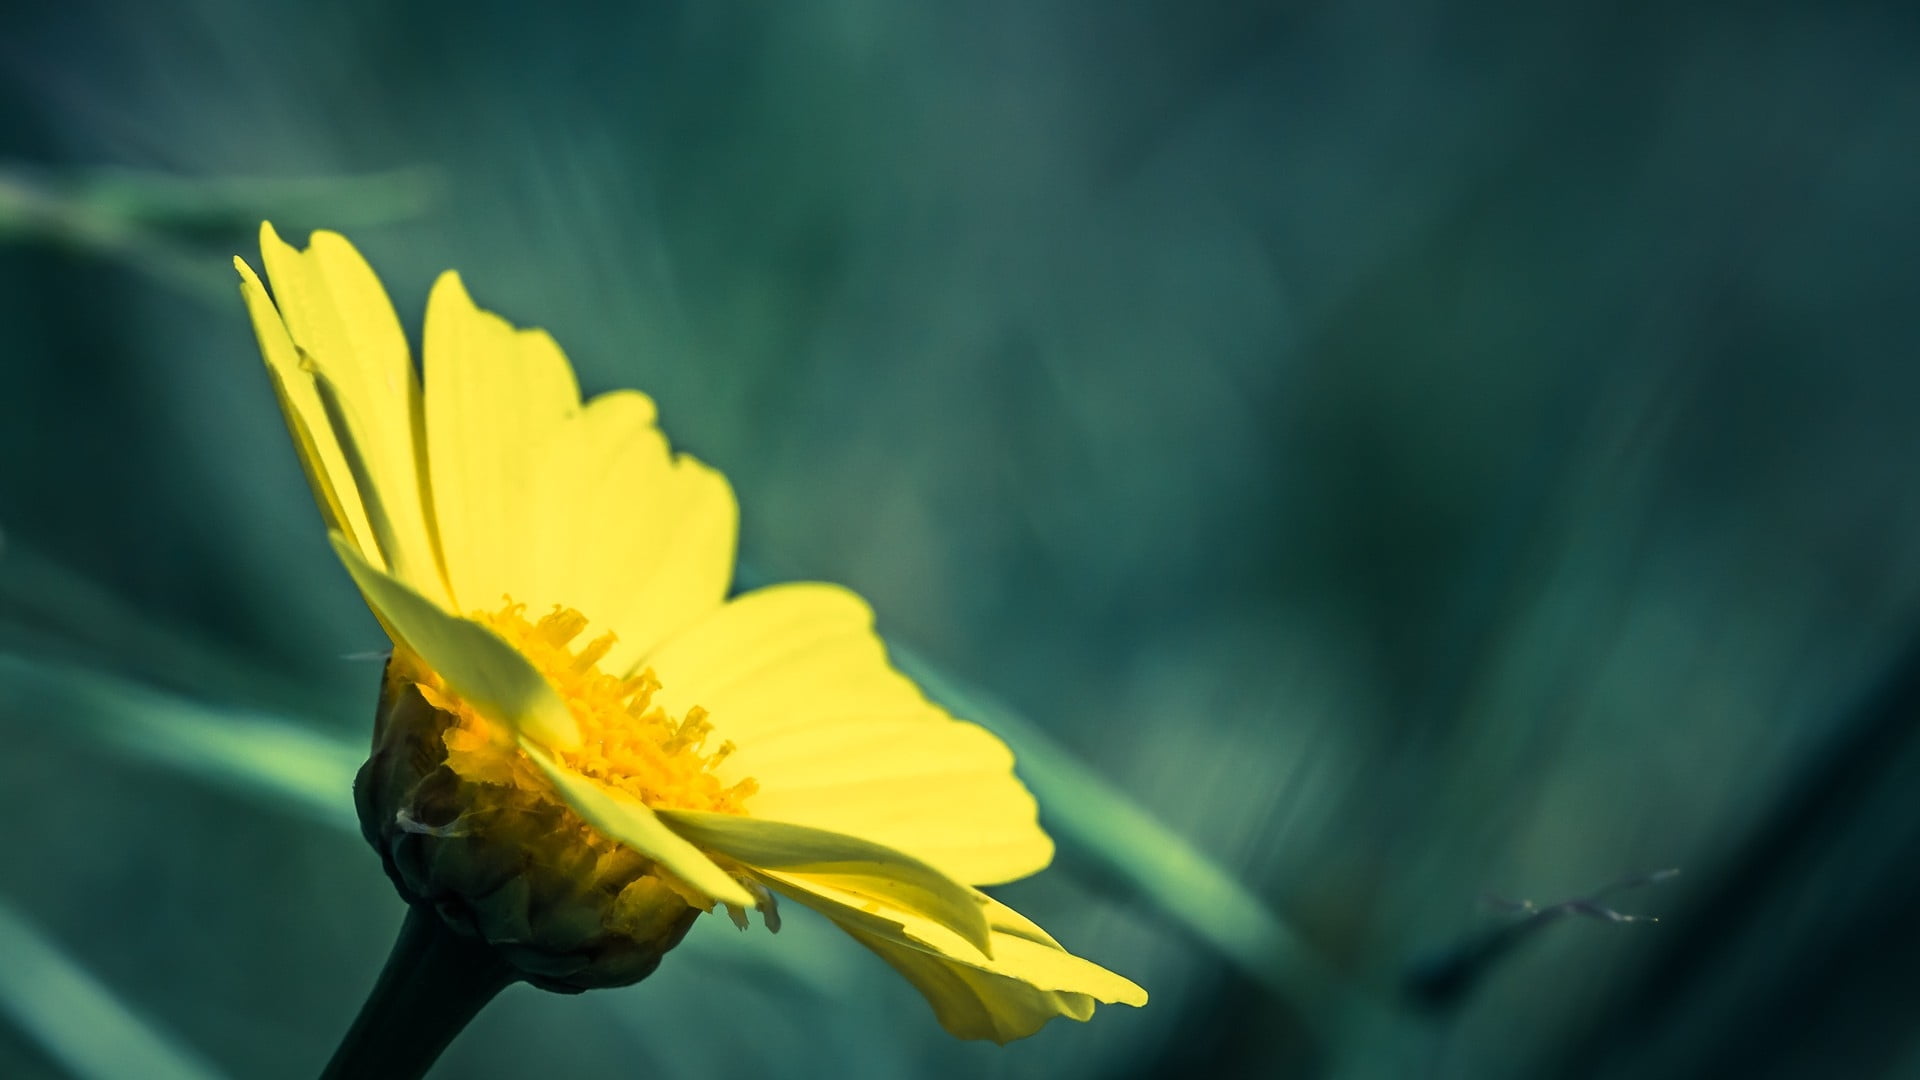 macroshot of yellow full-bloomed daisy